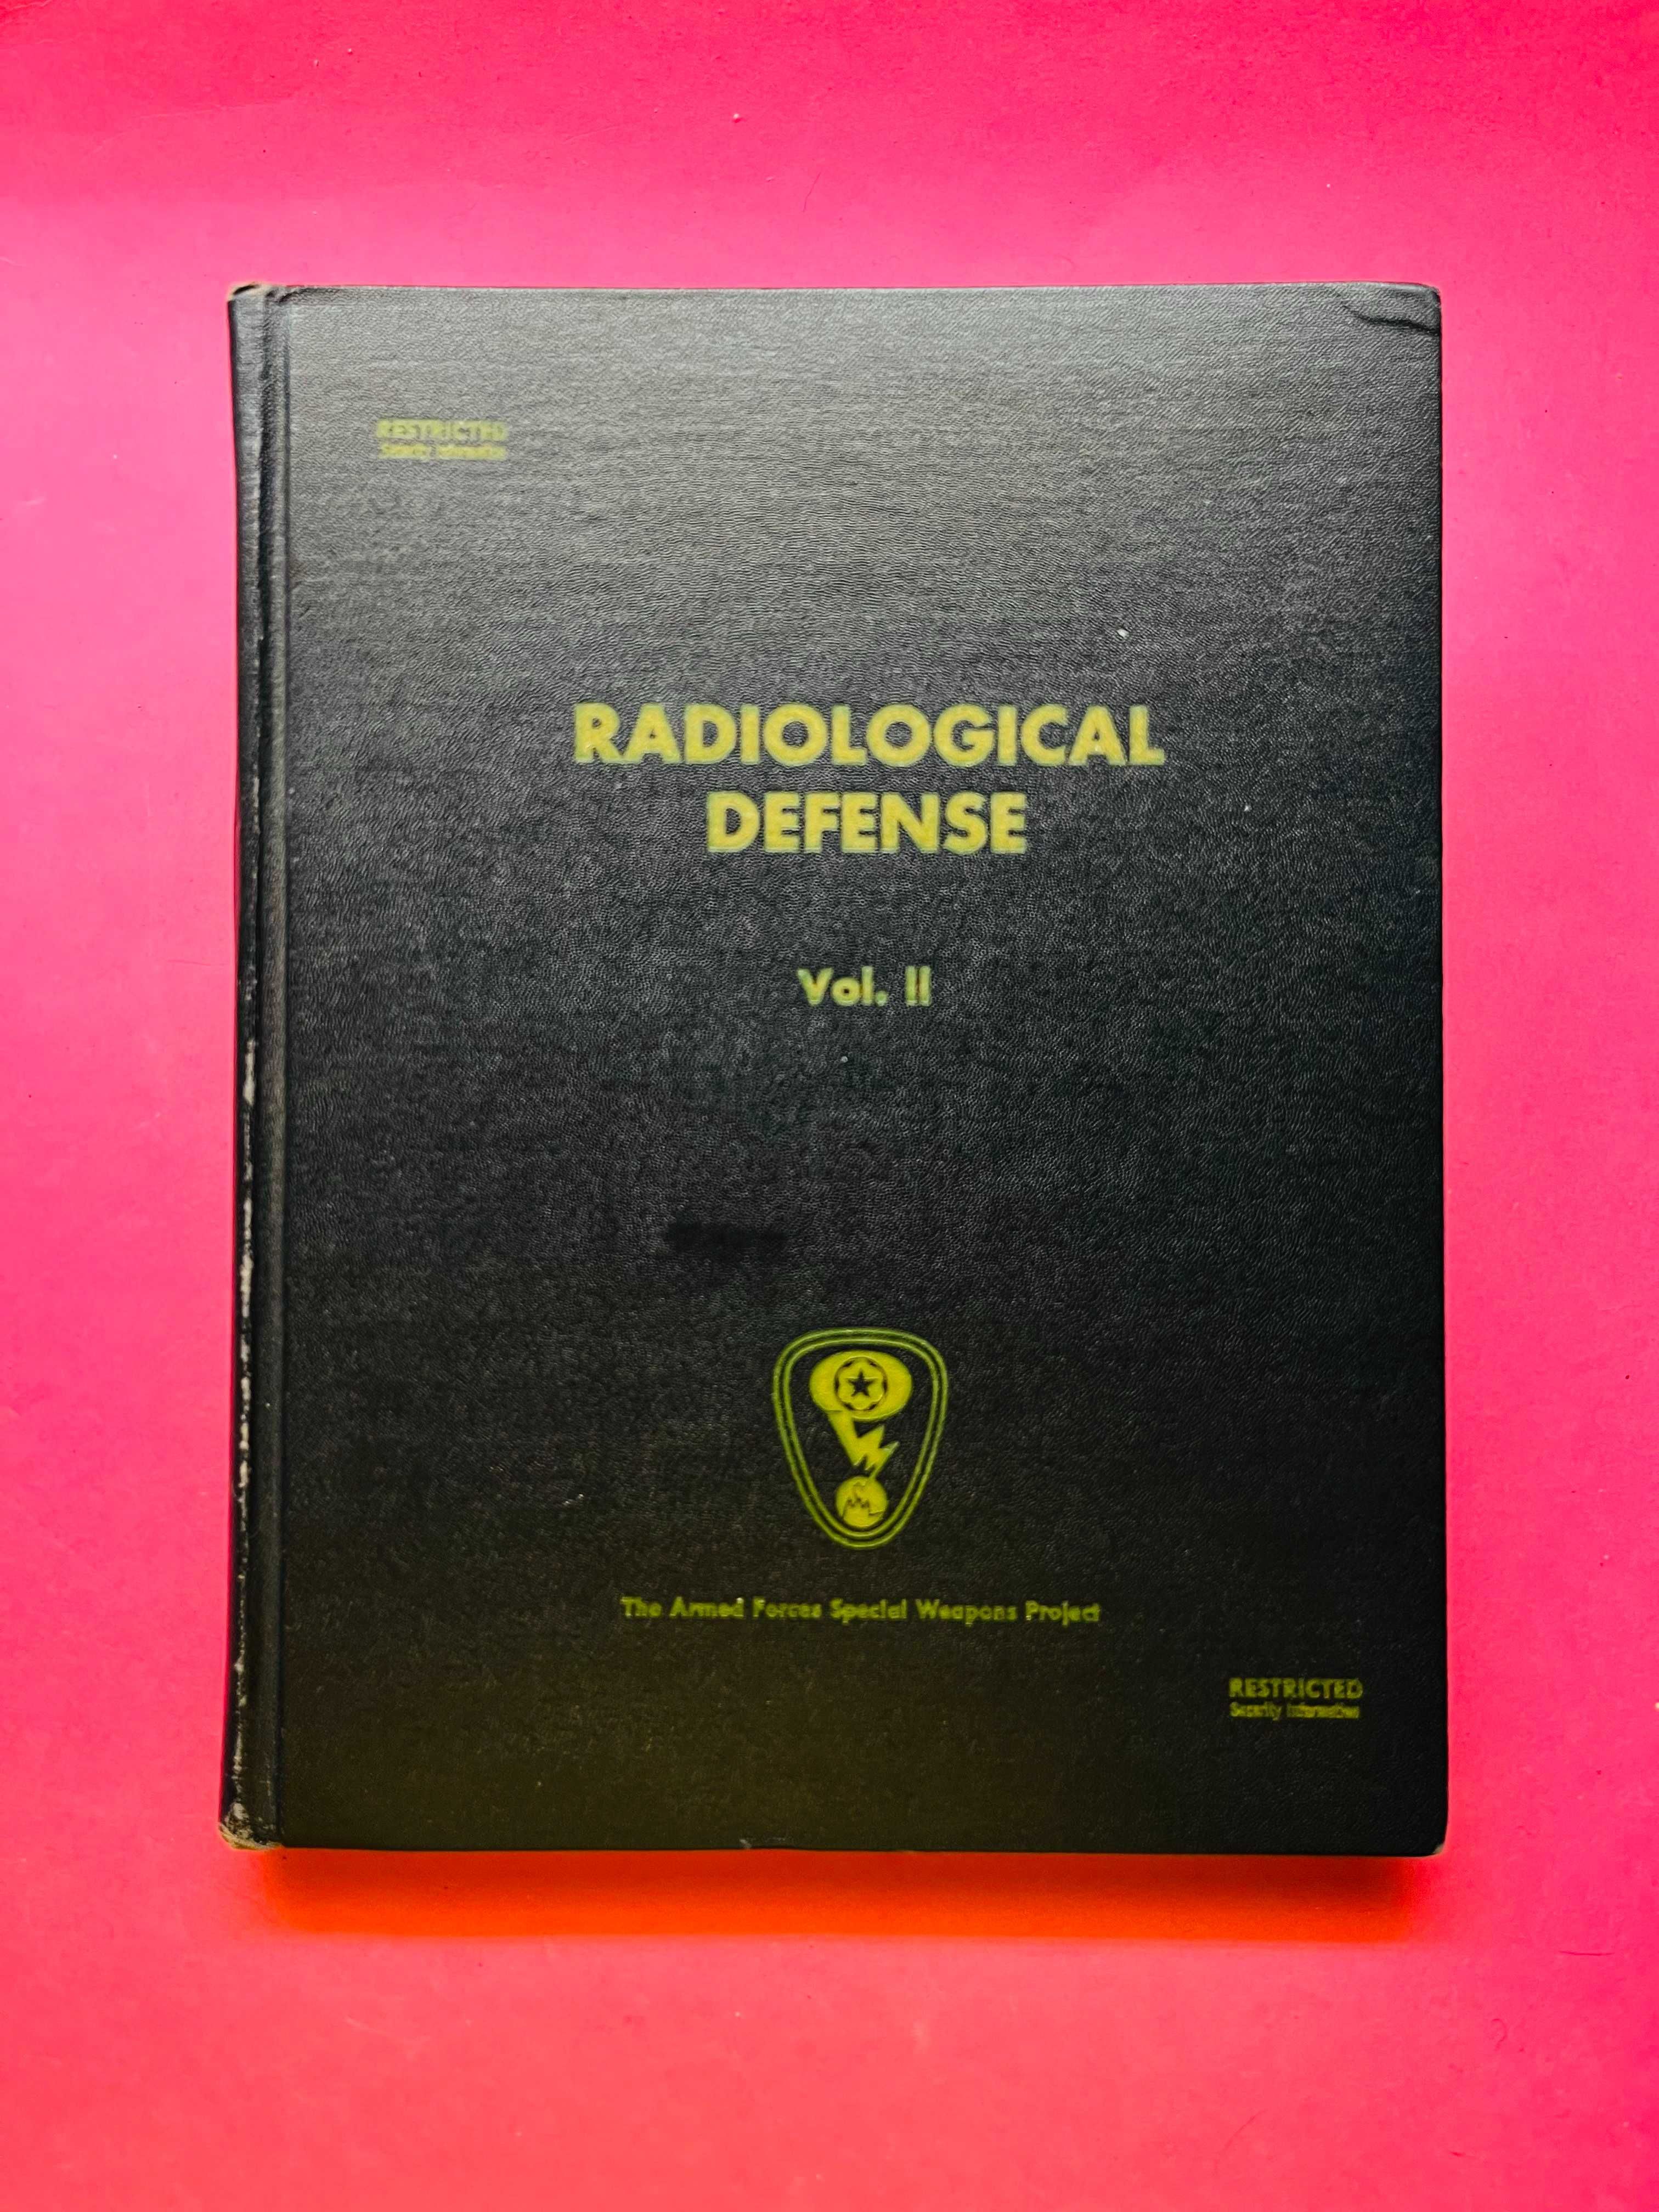 Radiological Defense Vol II